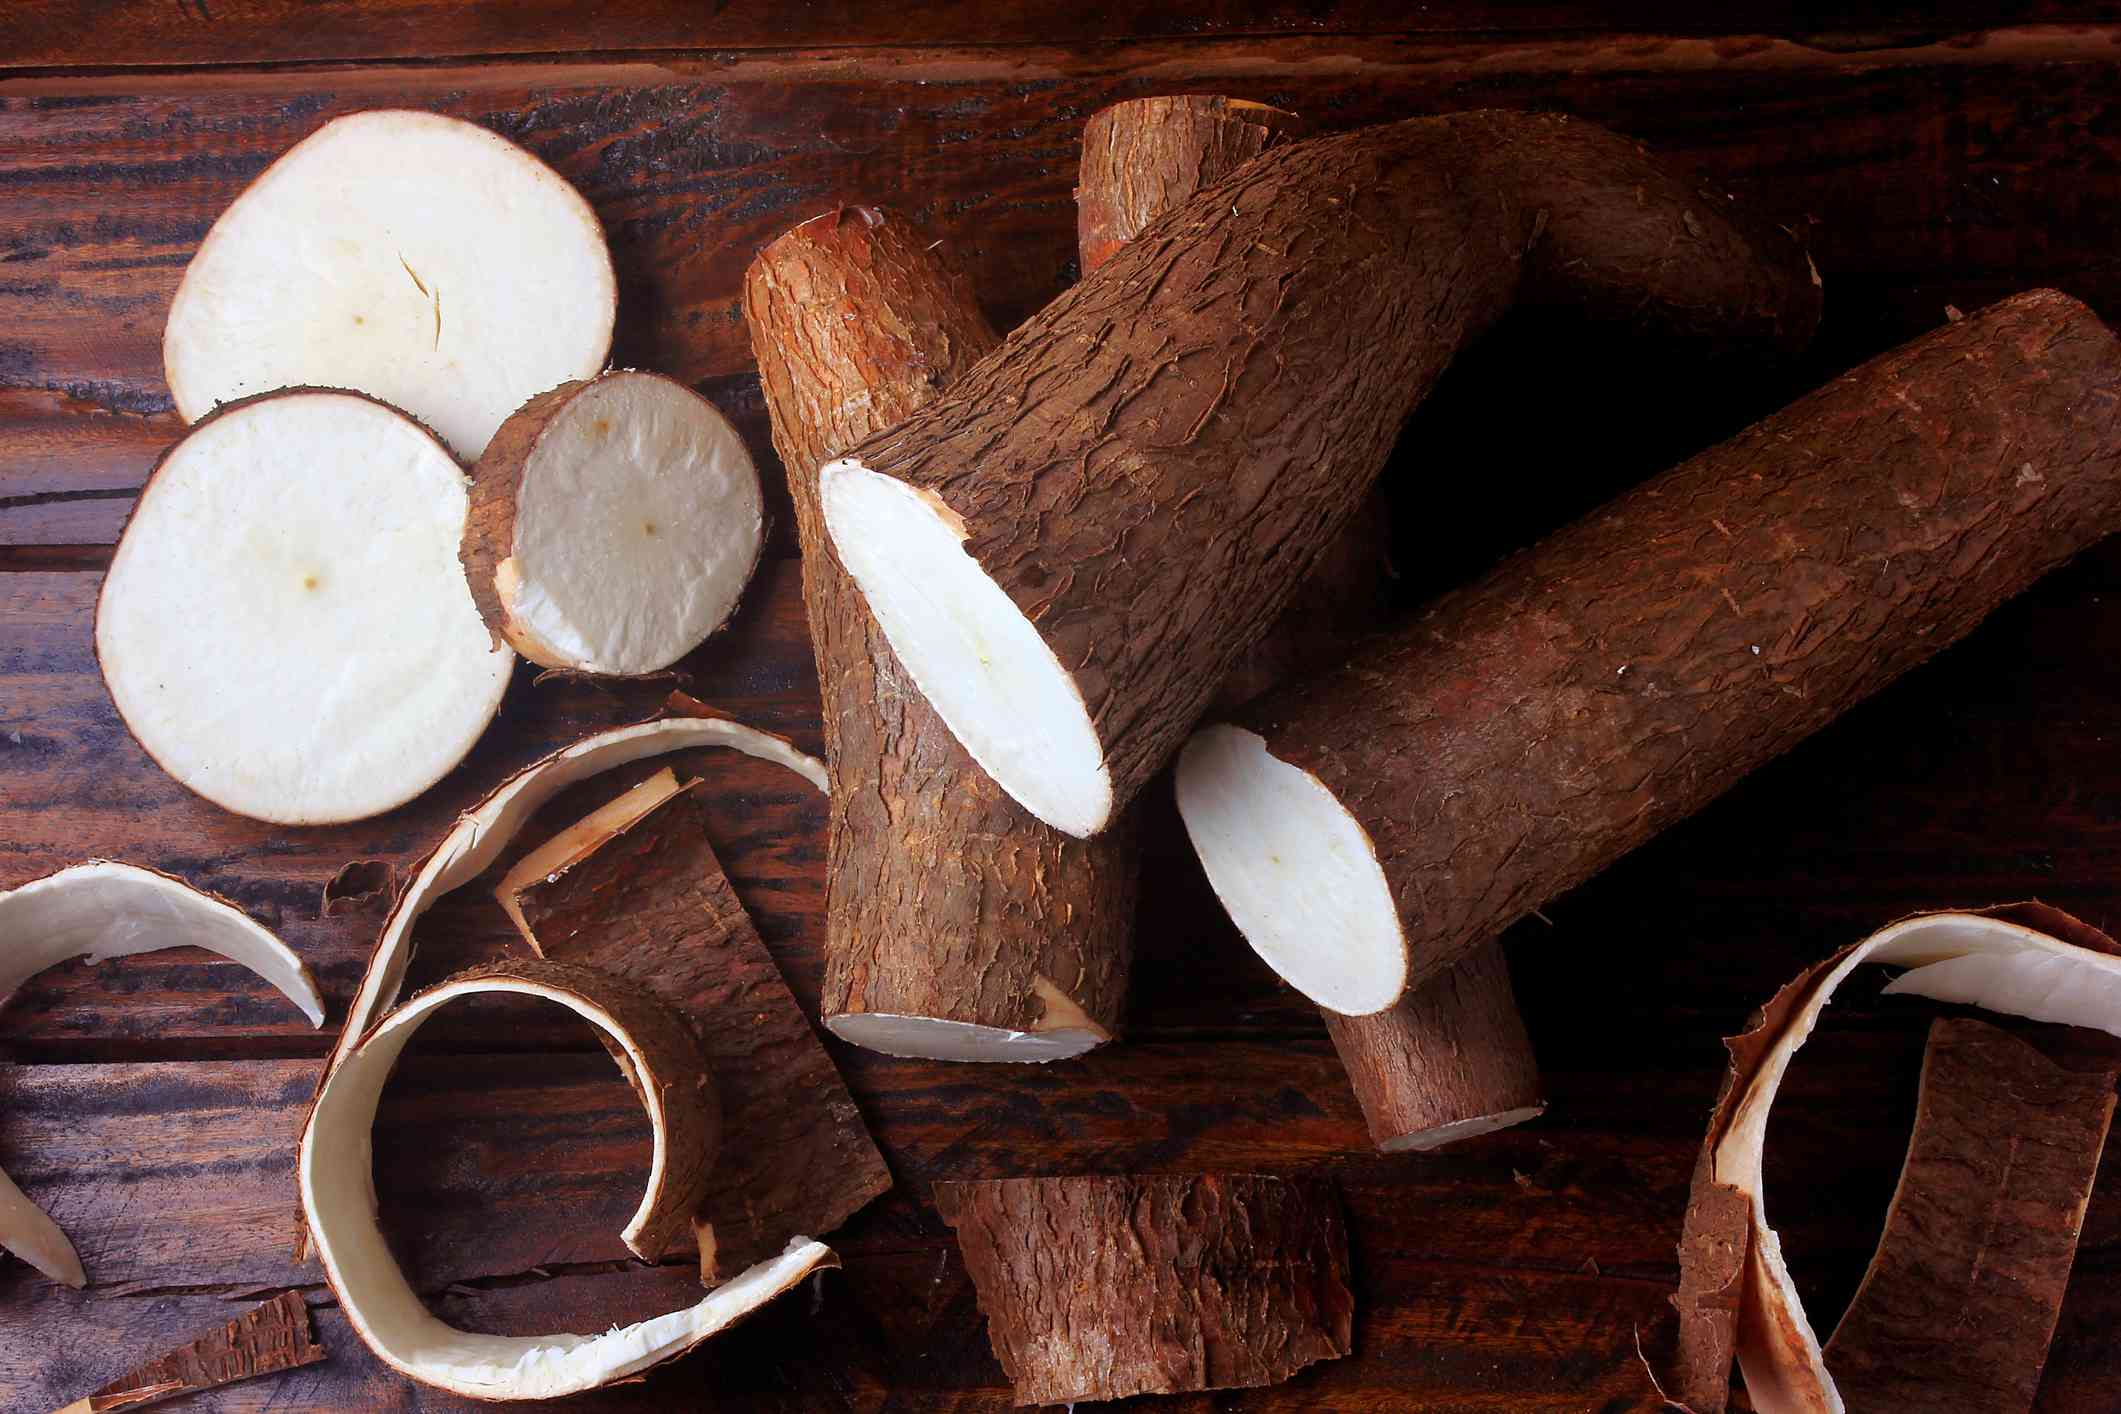 Health Benefits of Cassava